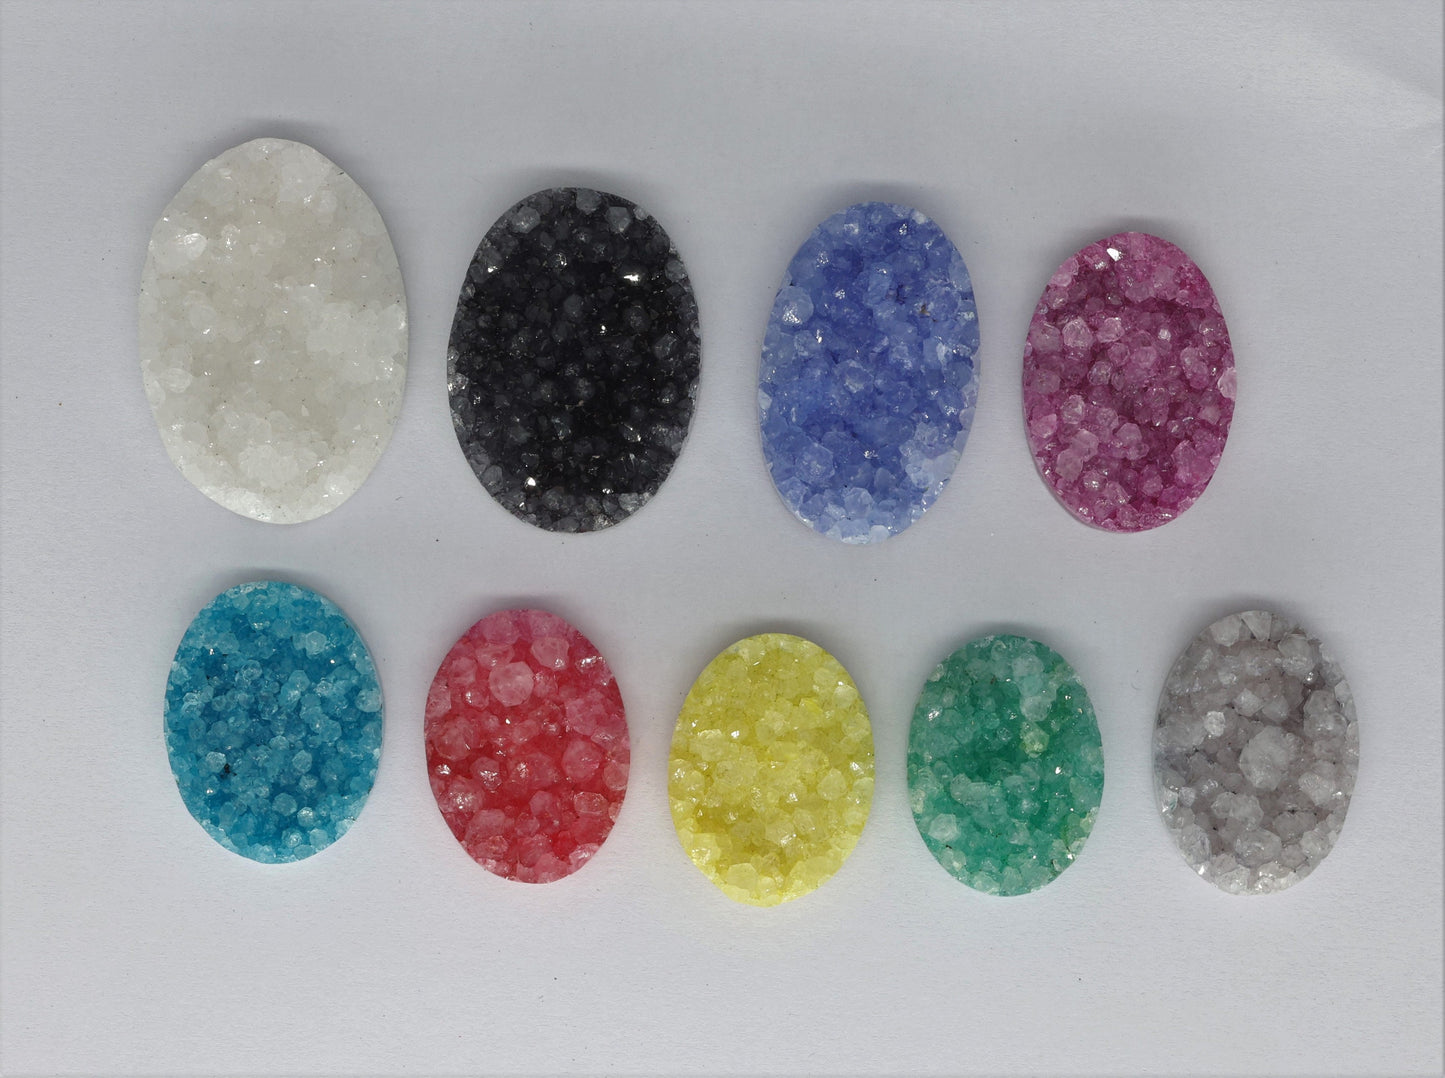 Large Oval Druzy gemstones 15 - 70 mm Long gemstone supplies